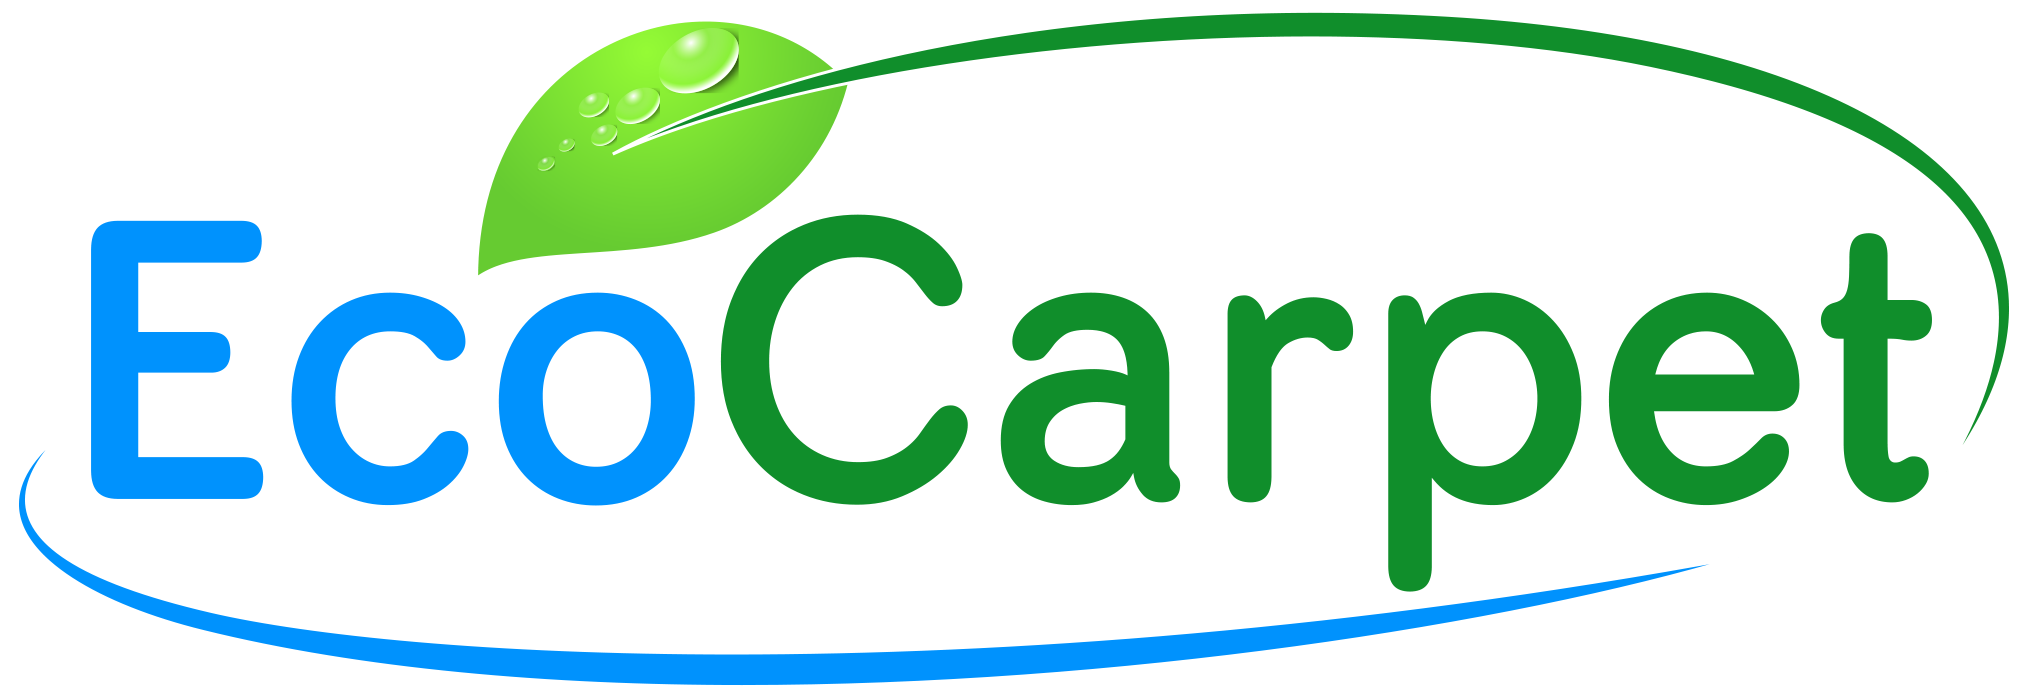 Ecocarpet Contact Us